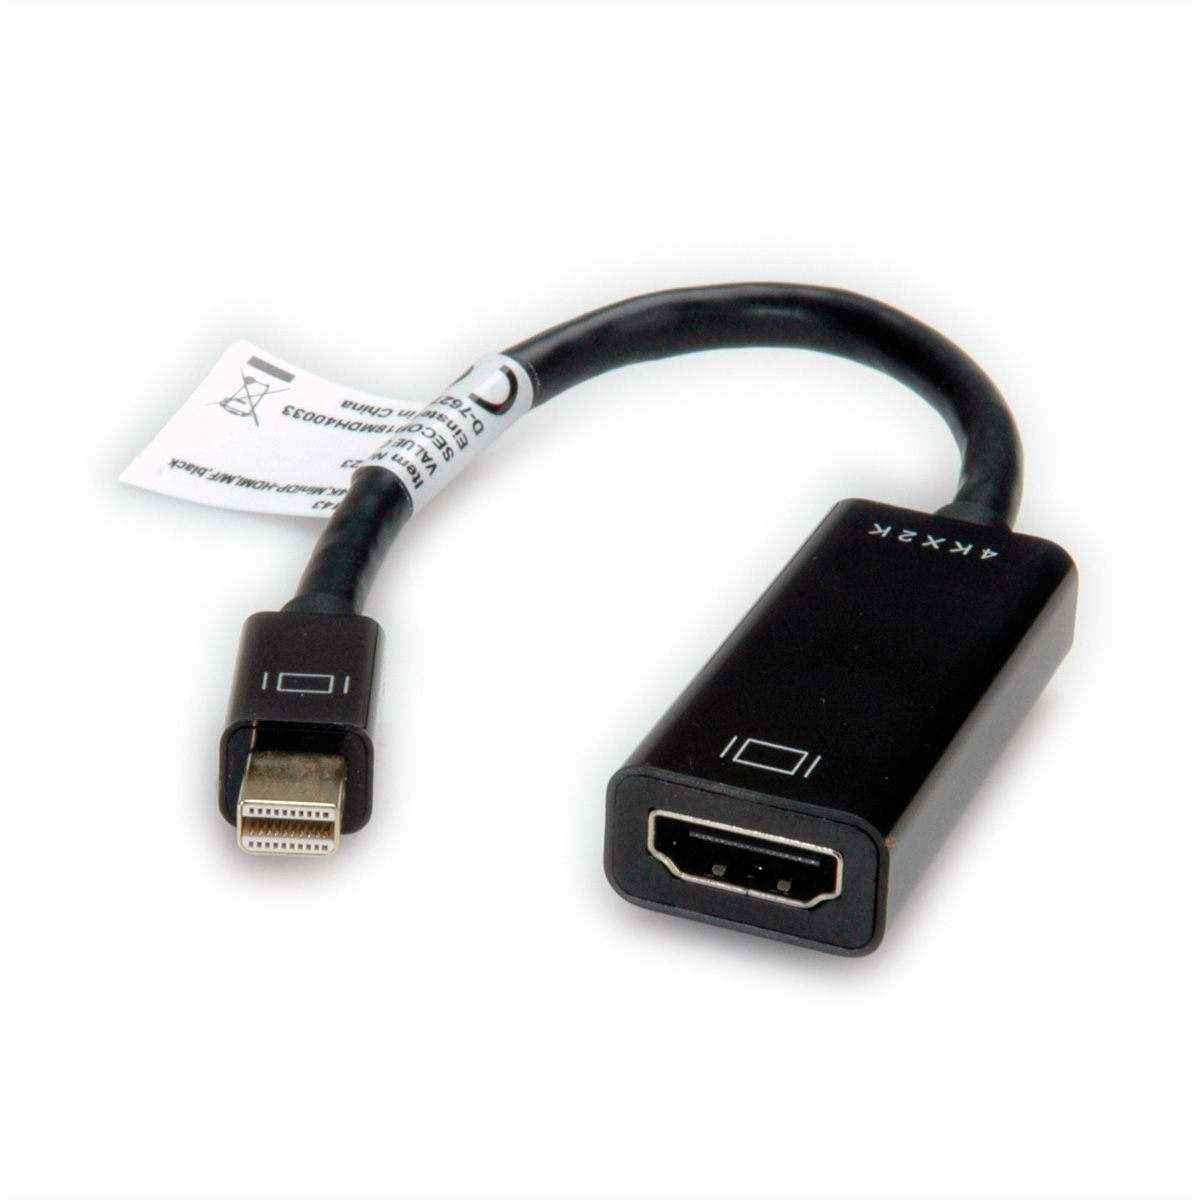 VALUE Adapterkabel 4K MiniDP-HDMI ST/BU - Adapter - Digital/Display/Video (12.99.3143)